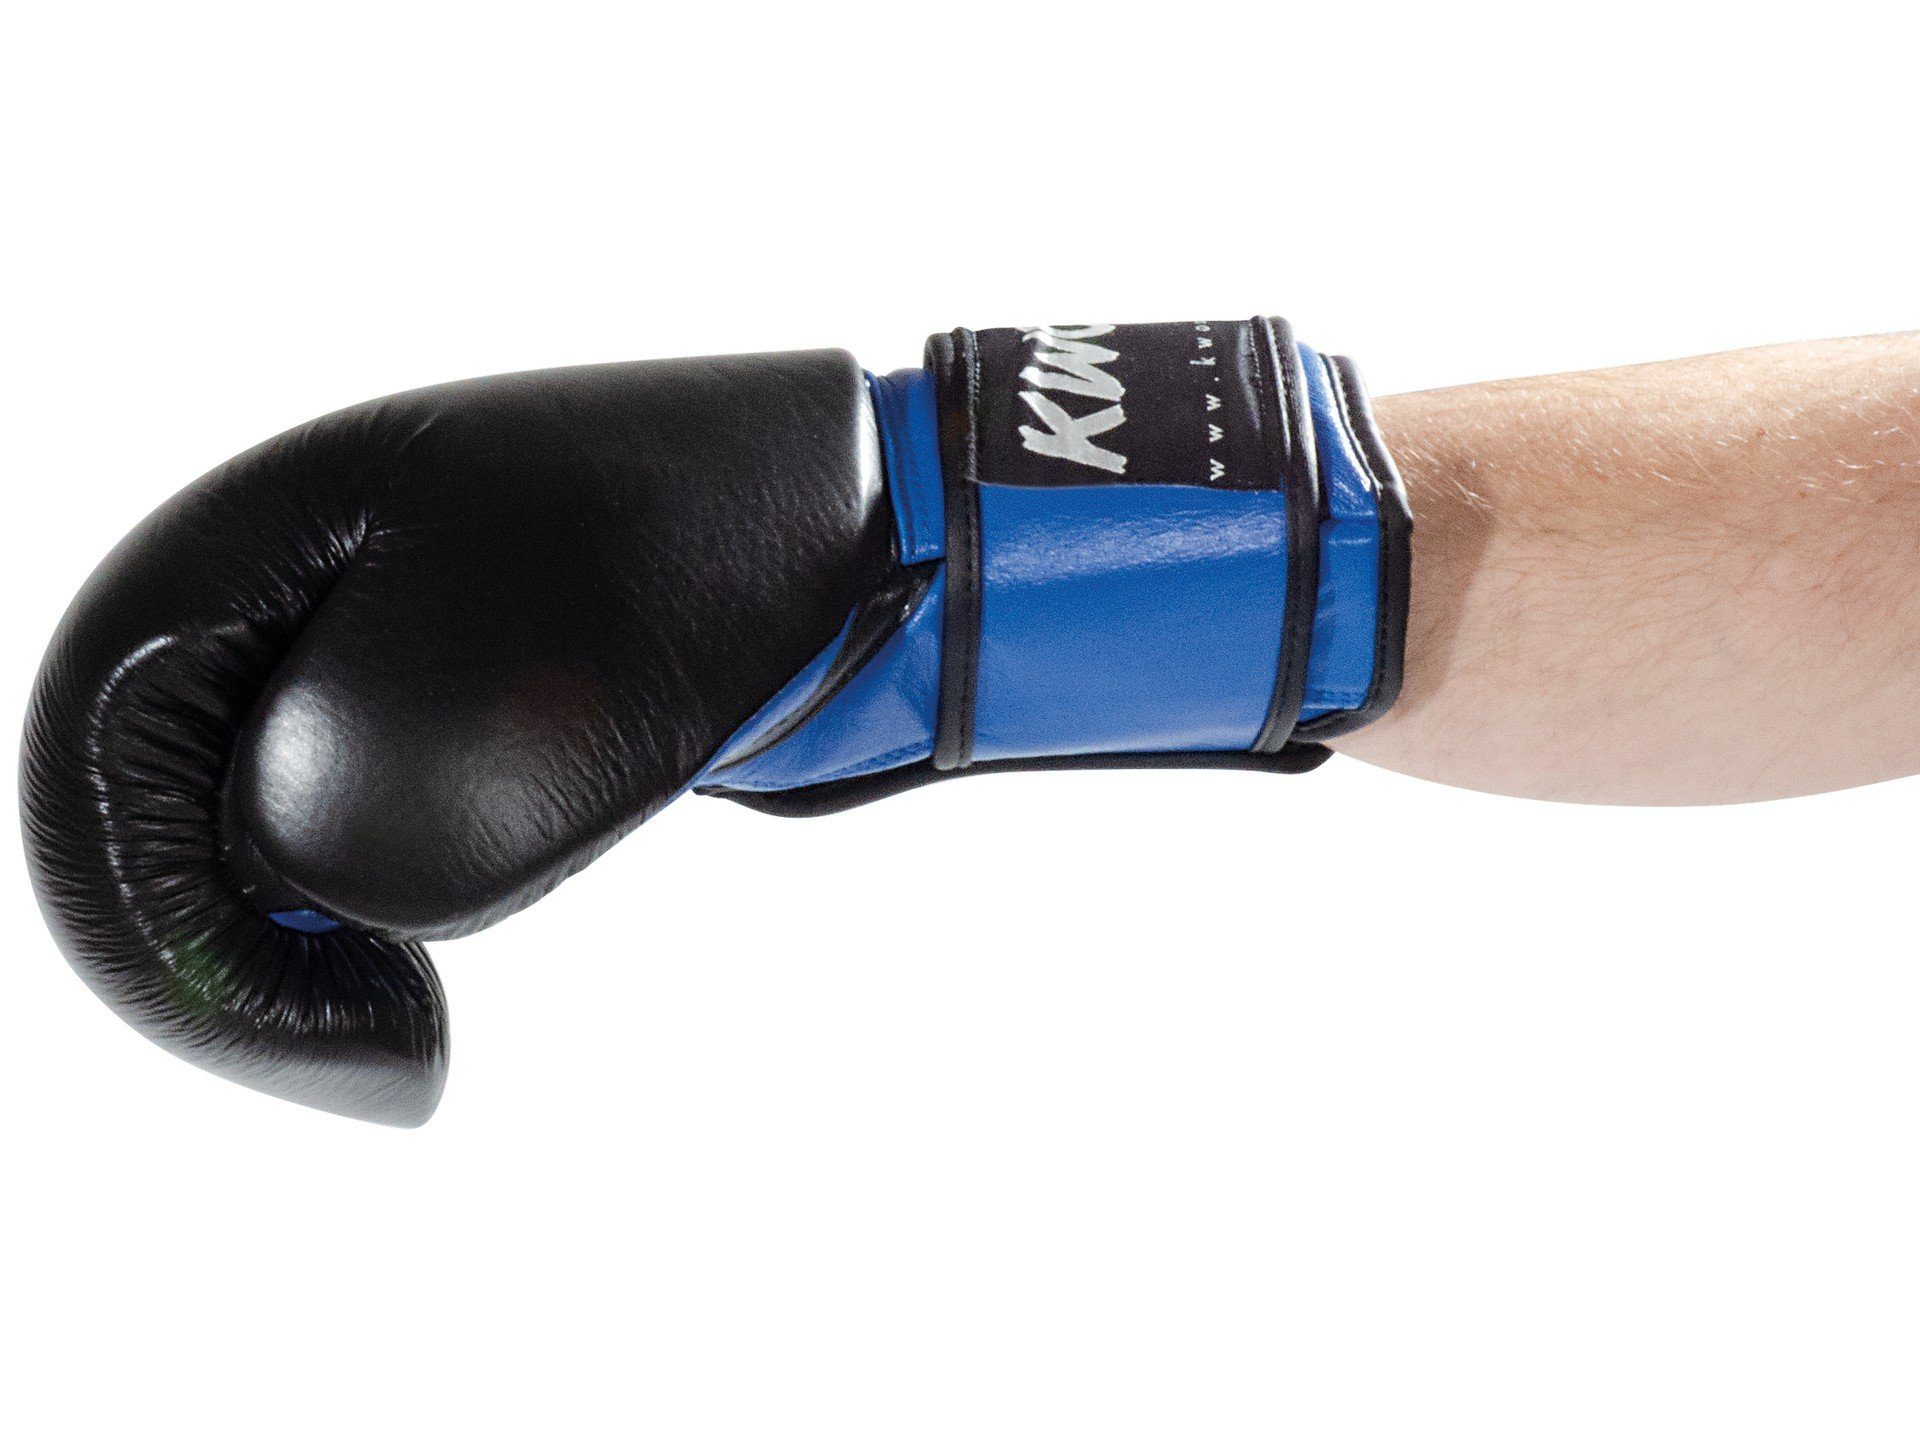 Ergo Kickboxen Thaiboxen Echtes Paar), KWON Champ Boxen Boxhandschuhe Leder, Box-Handschuhe anerkannt Leder (Vollkontakt, Ausführung, Profi WKU schwarz/blau Profi KO Form,